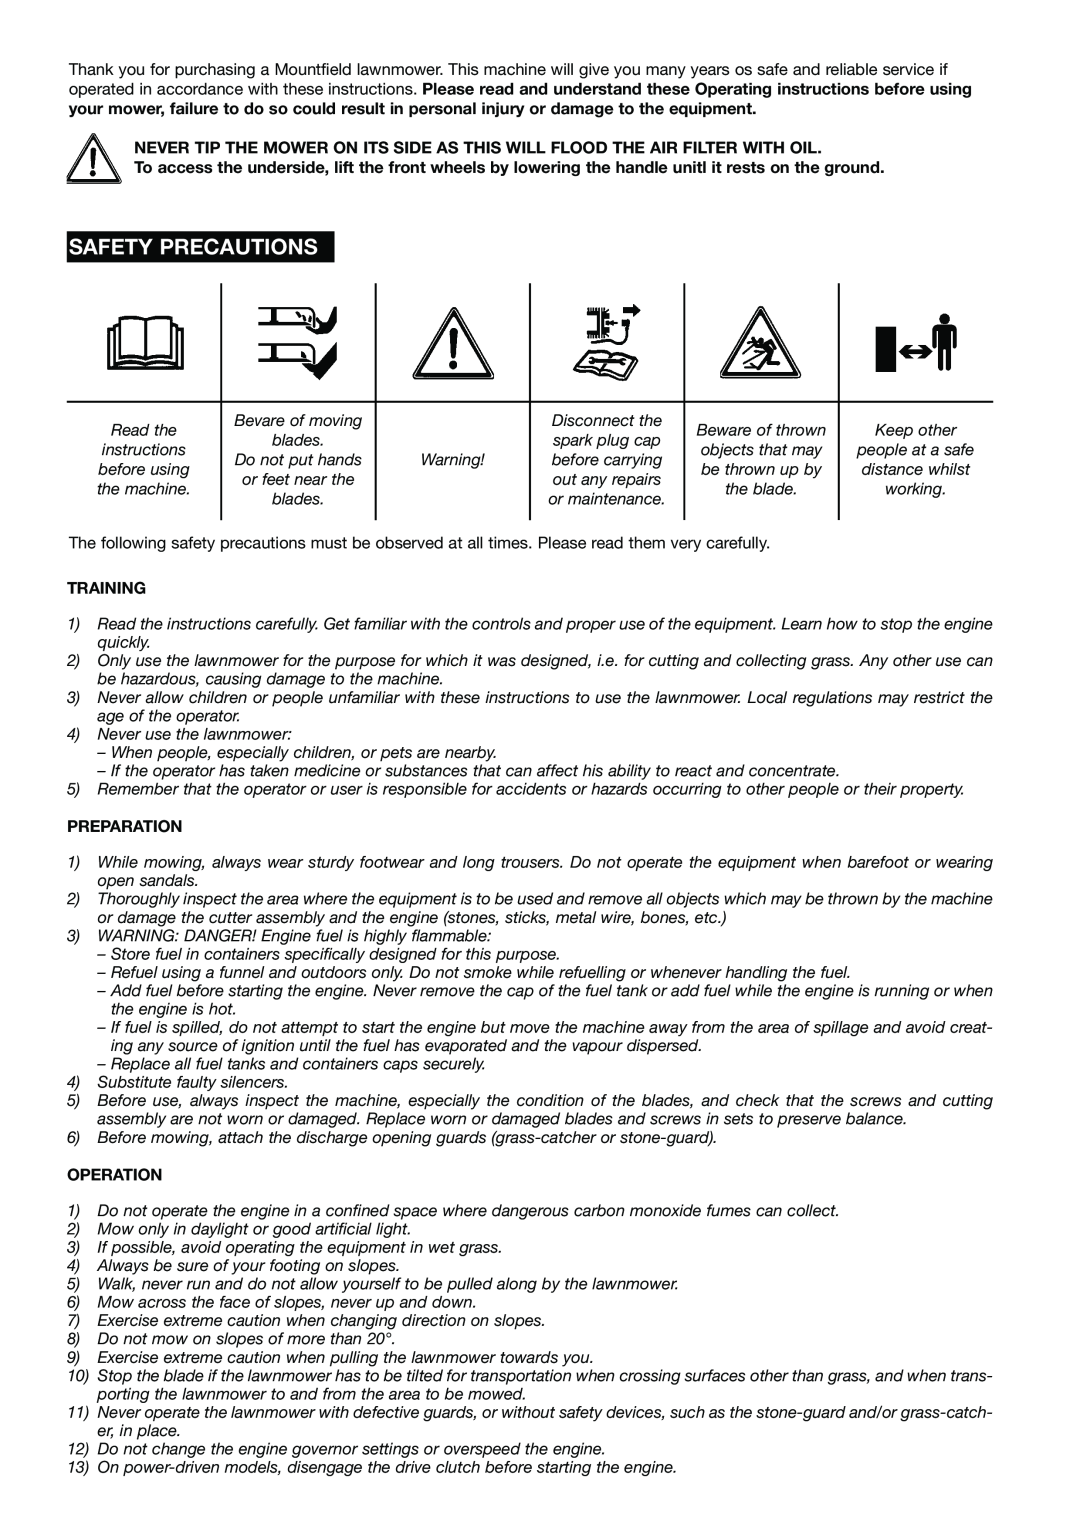 Mountfield HP470 operating instructions Safety Precautions, Training, Preparation, Operation 